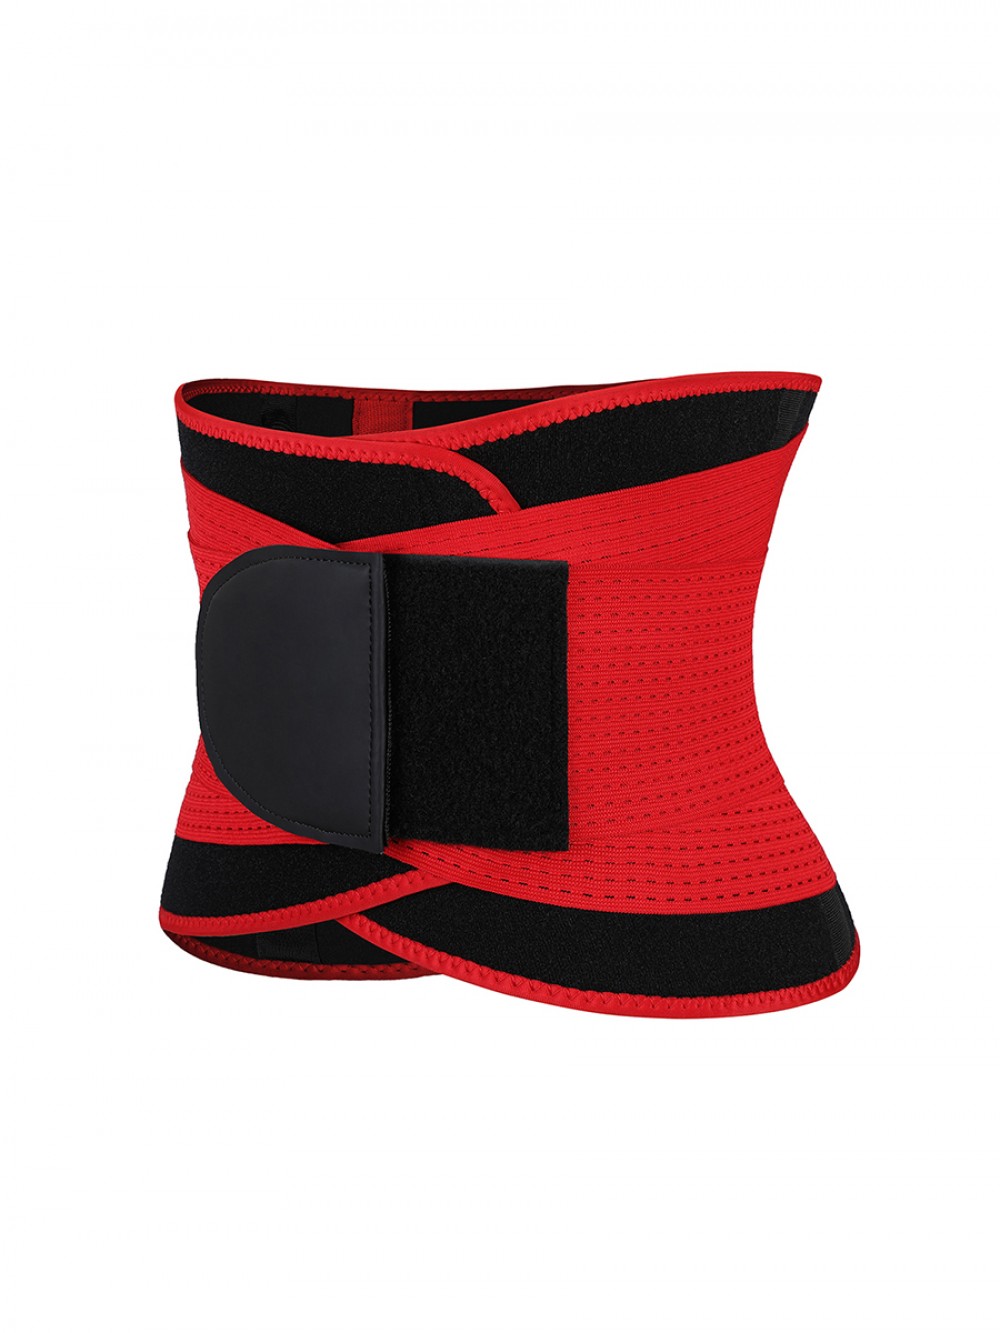 Red 3-Layer Neoprene Waist Trainer Sauna Belt For Weight Loss